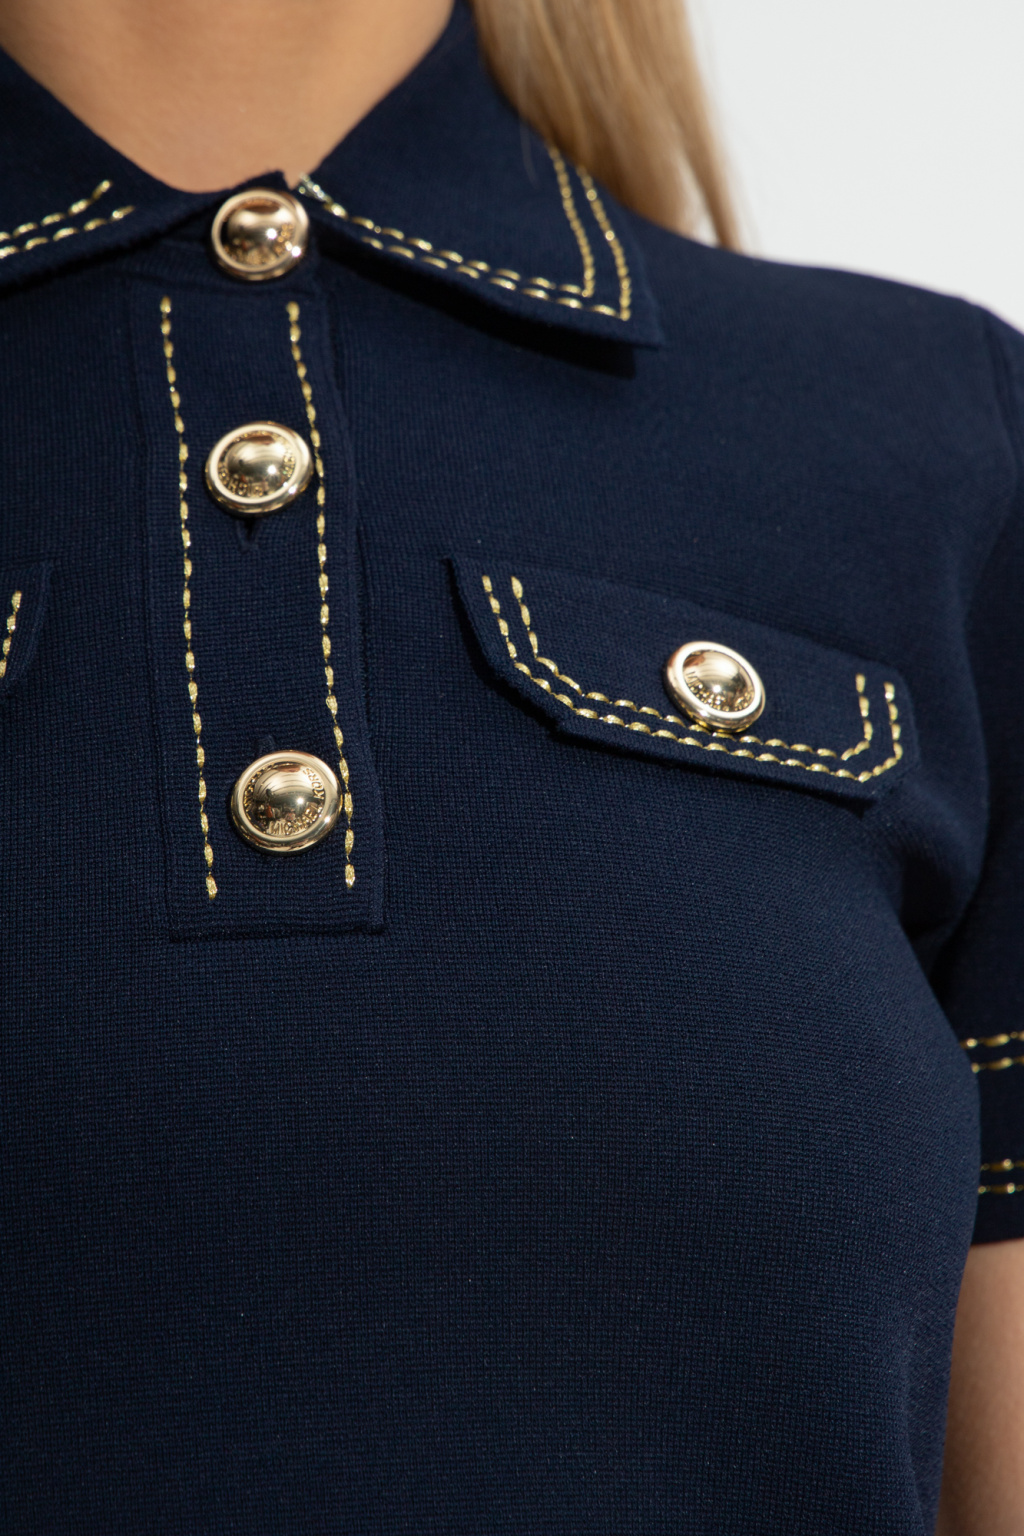 Michael Michael Kors Polo shirt with decorative stitching